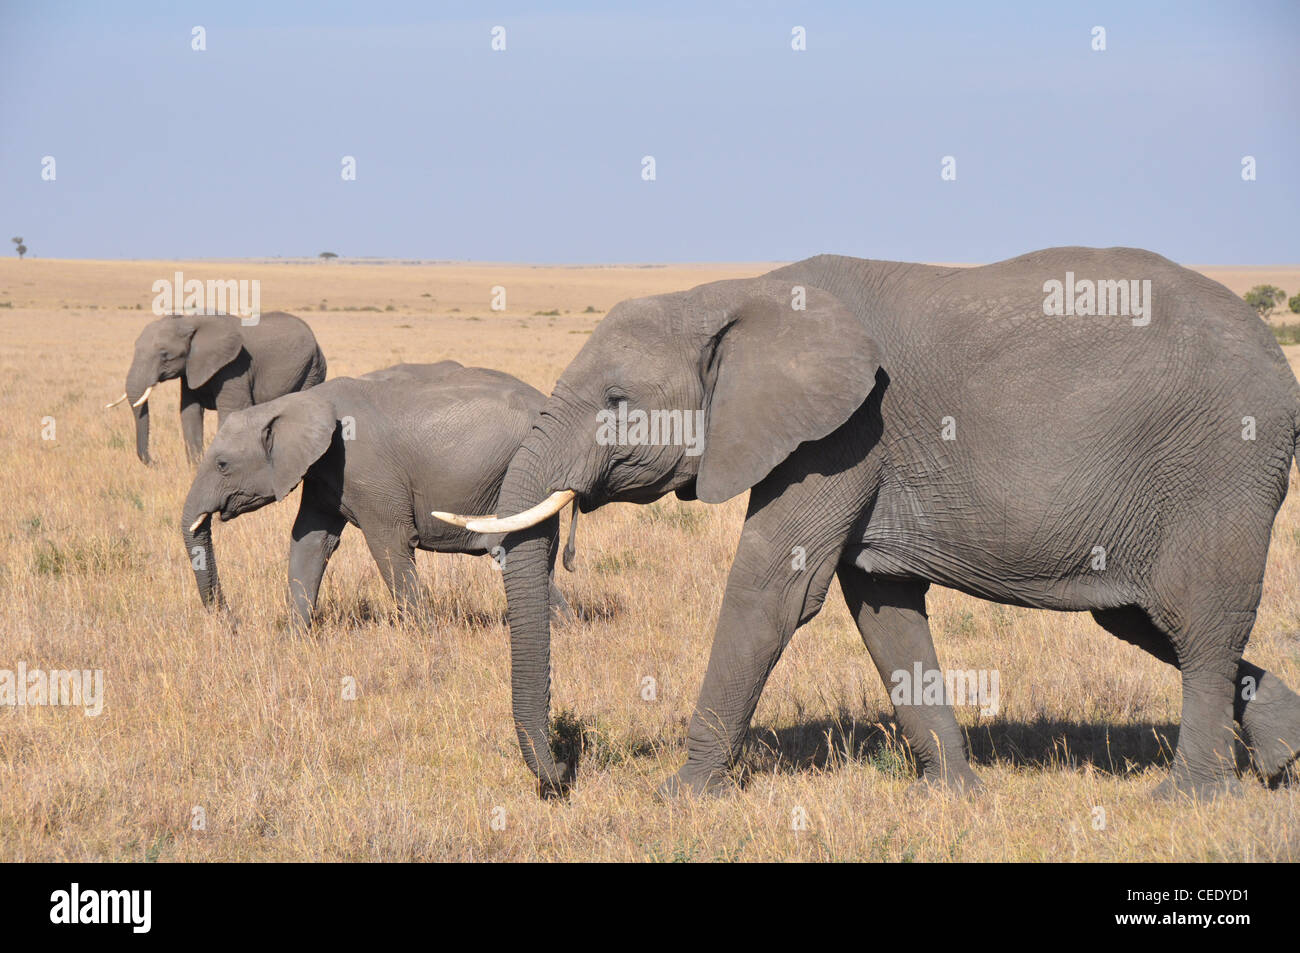 Elephants in the Savanna Stock Photo